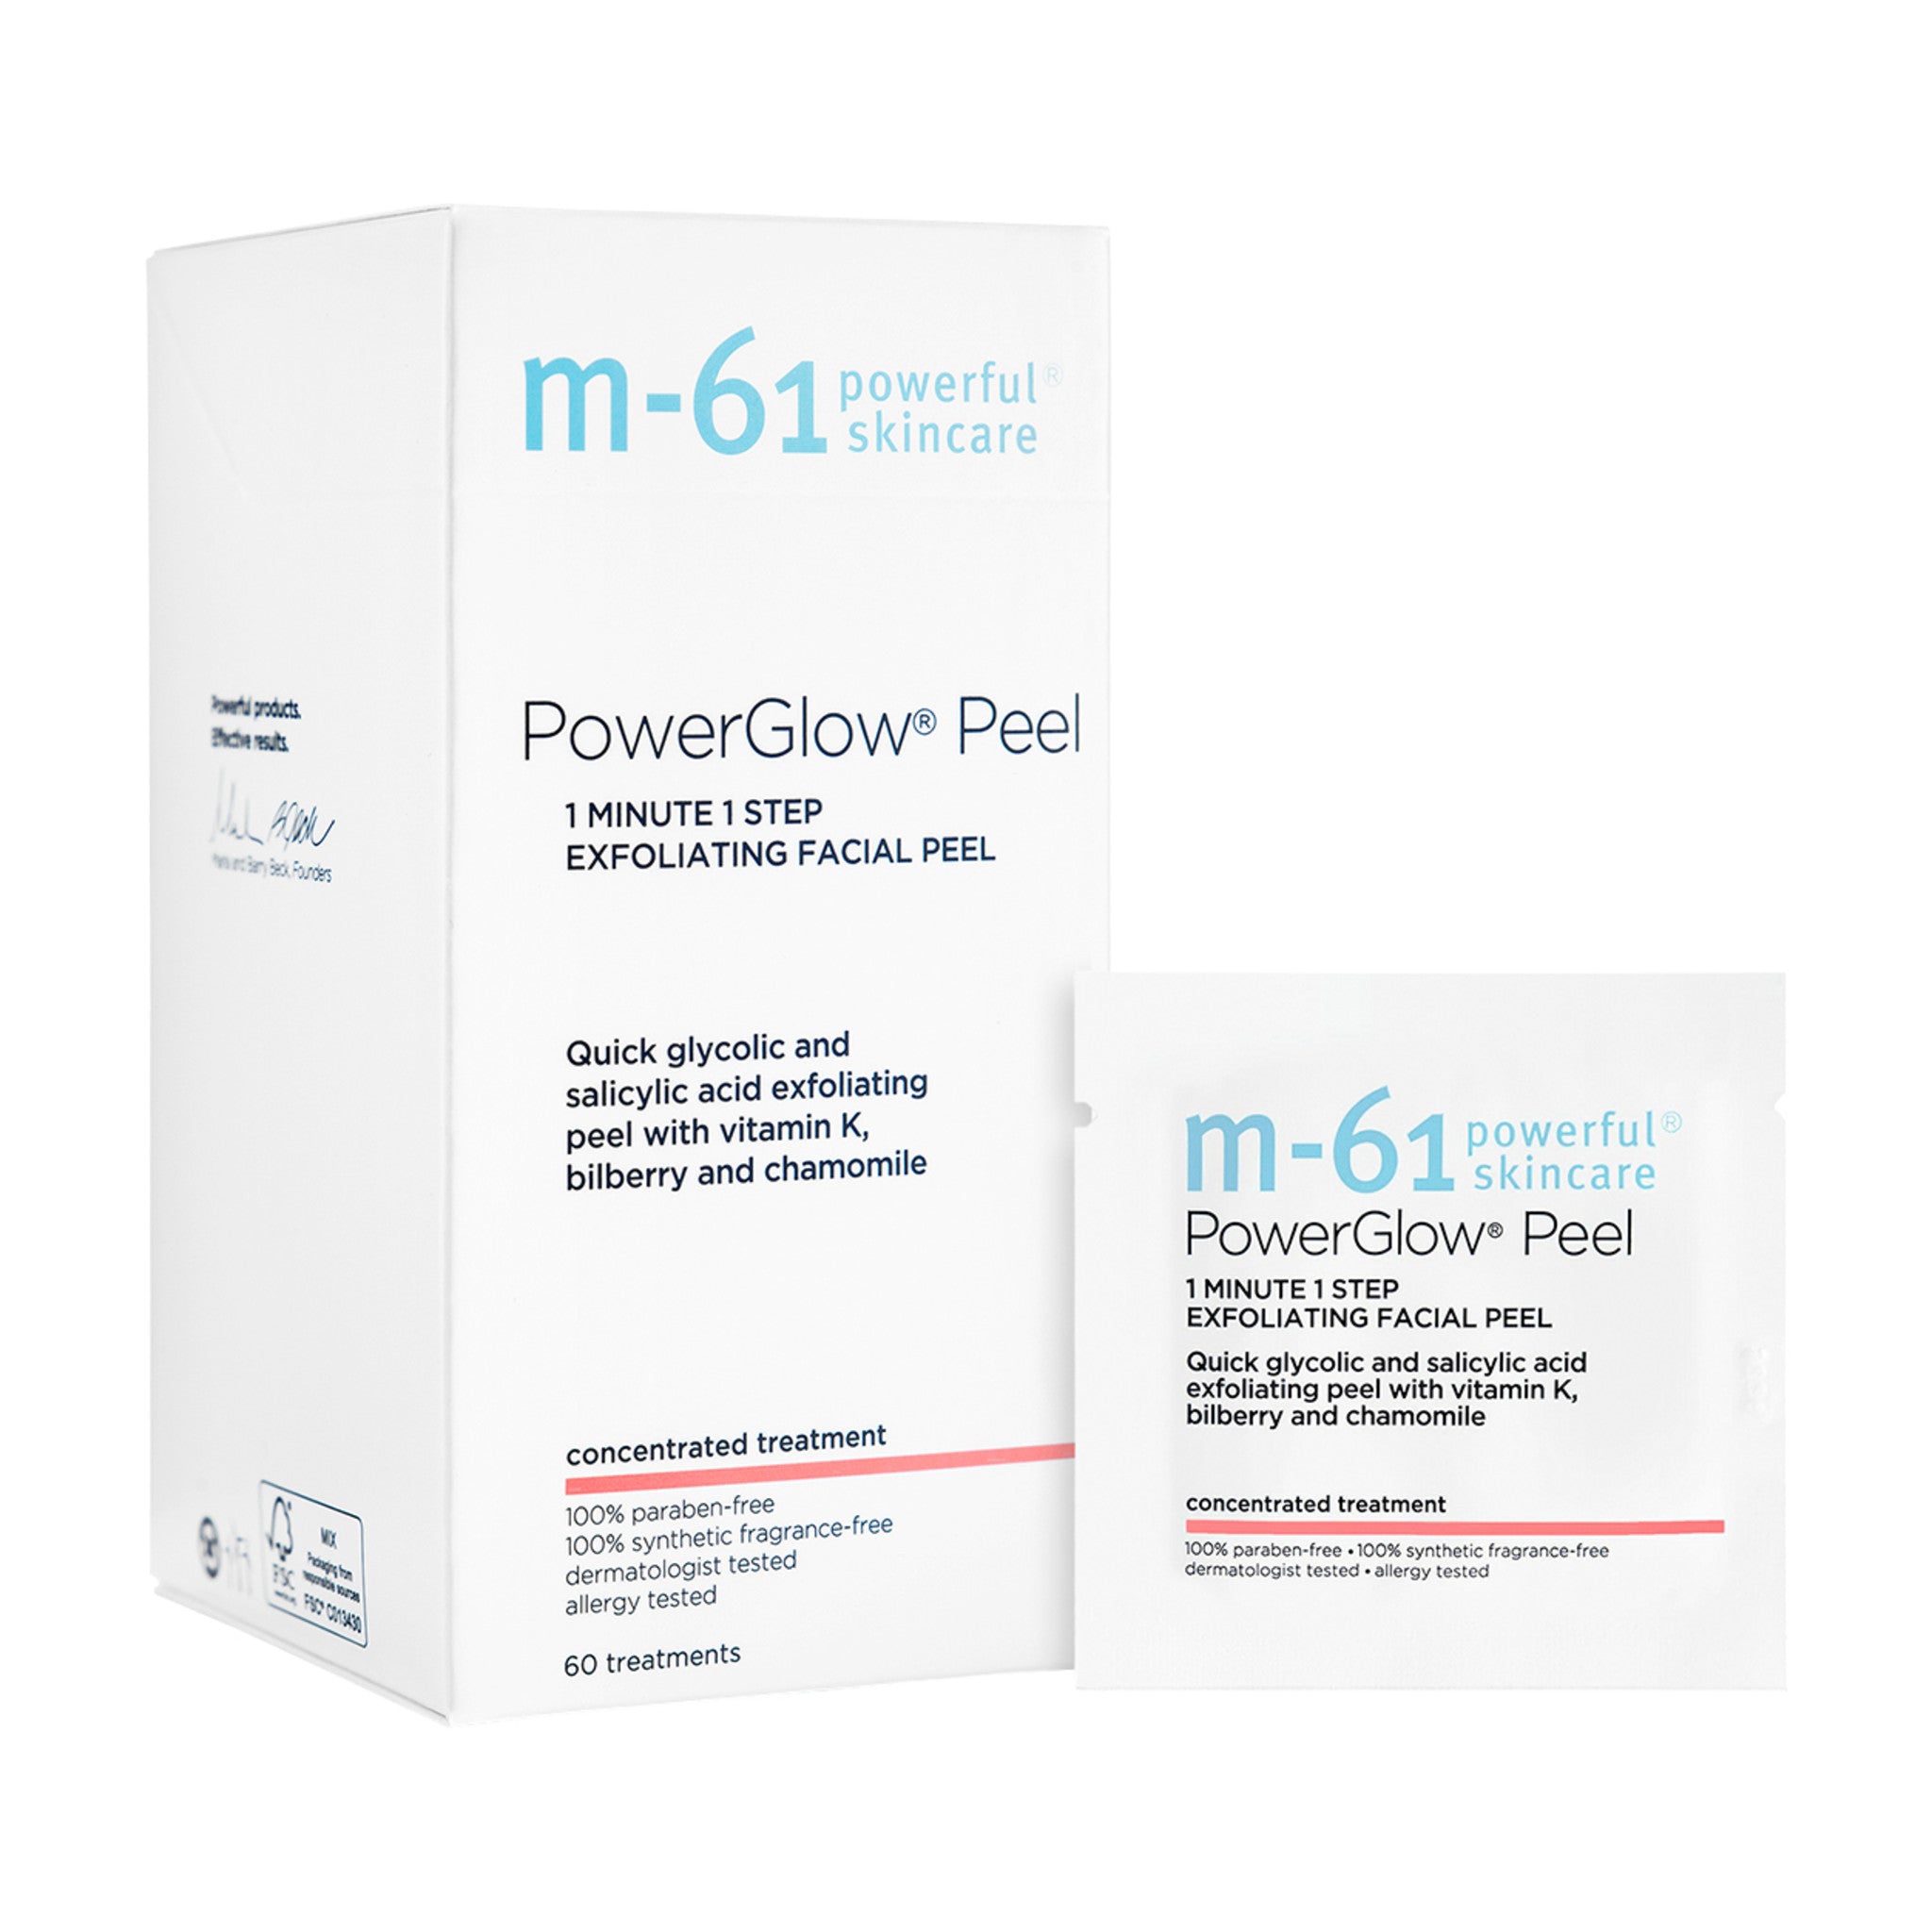 M-61 PowerGlow Peel Size variant: 60 treatments main image.